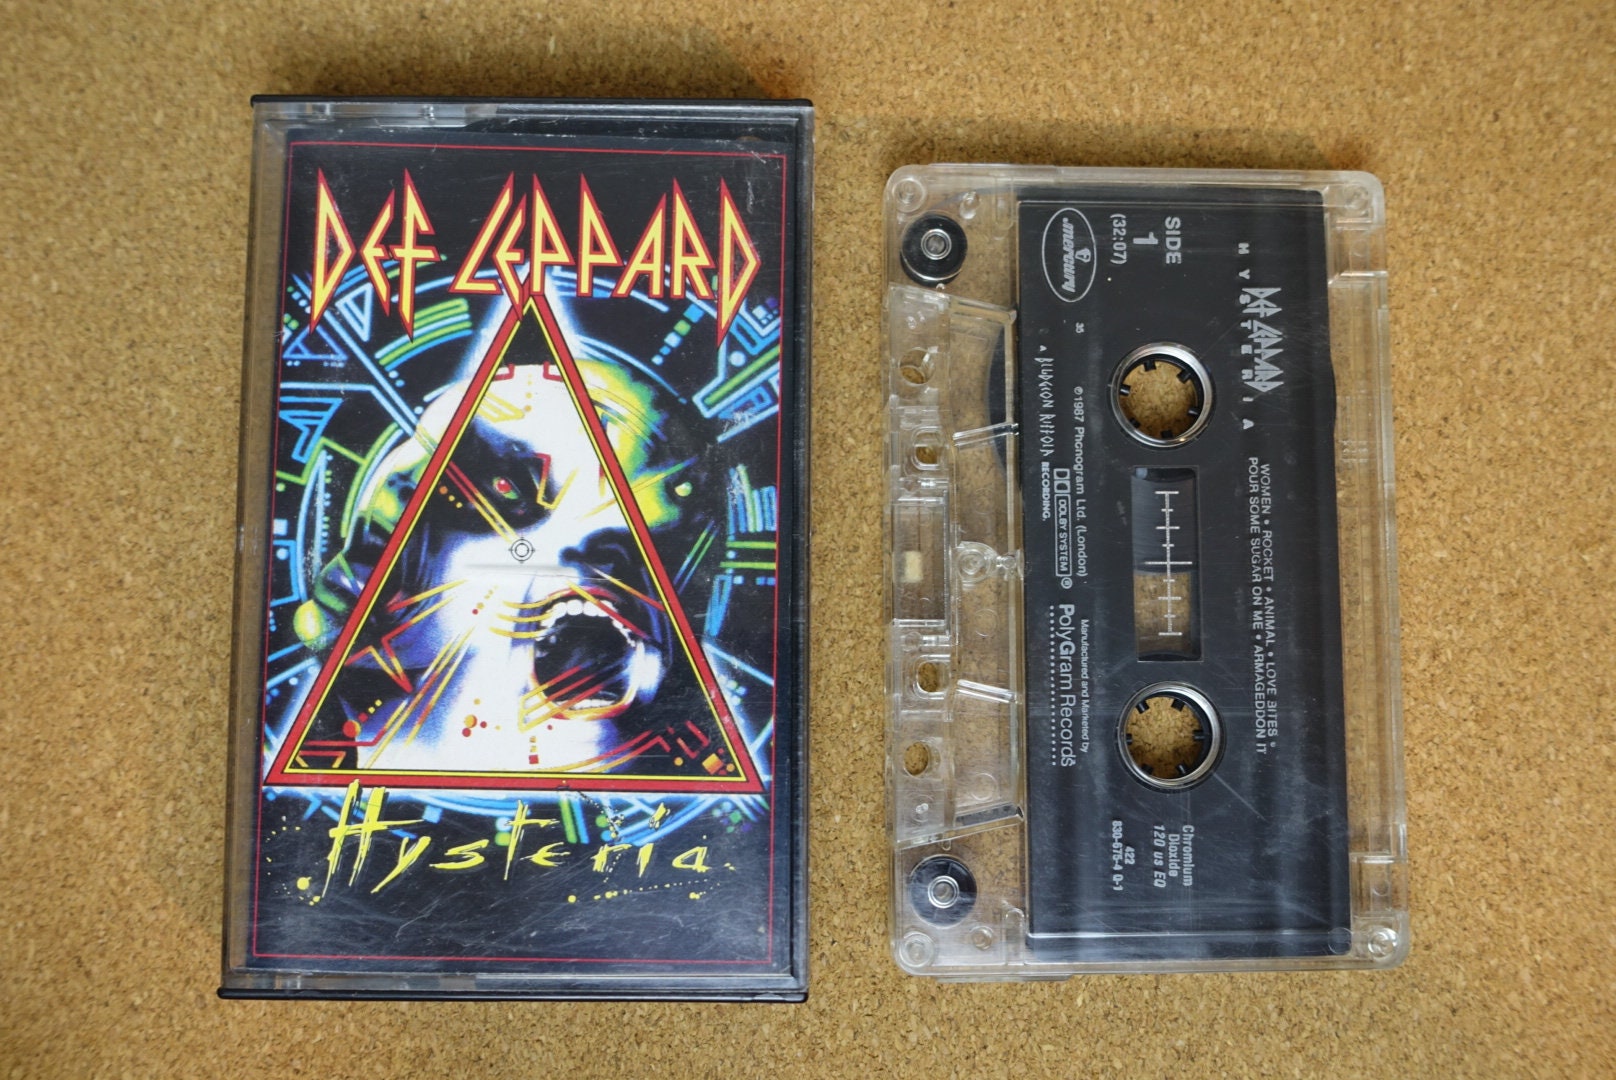 Def Leppard Cassette, Hysteria Cassette Tape, Vintage 1987, GLAM, Heavy Metal Cassettes, Mercury Records, Analog Music, Music Lover Gift